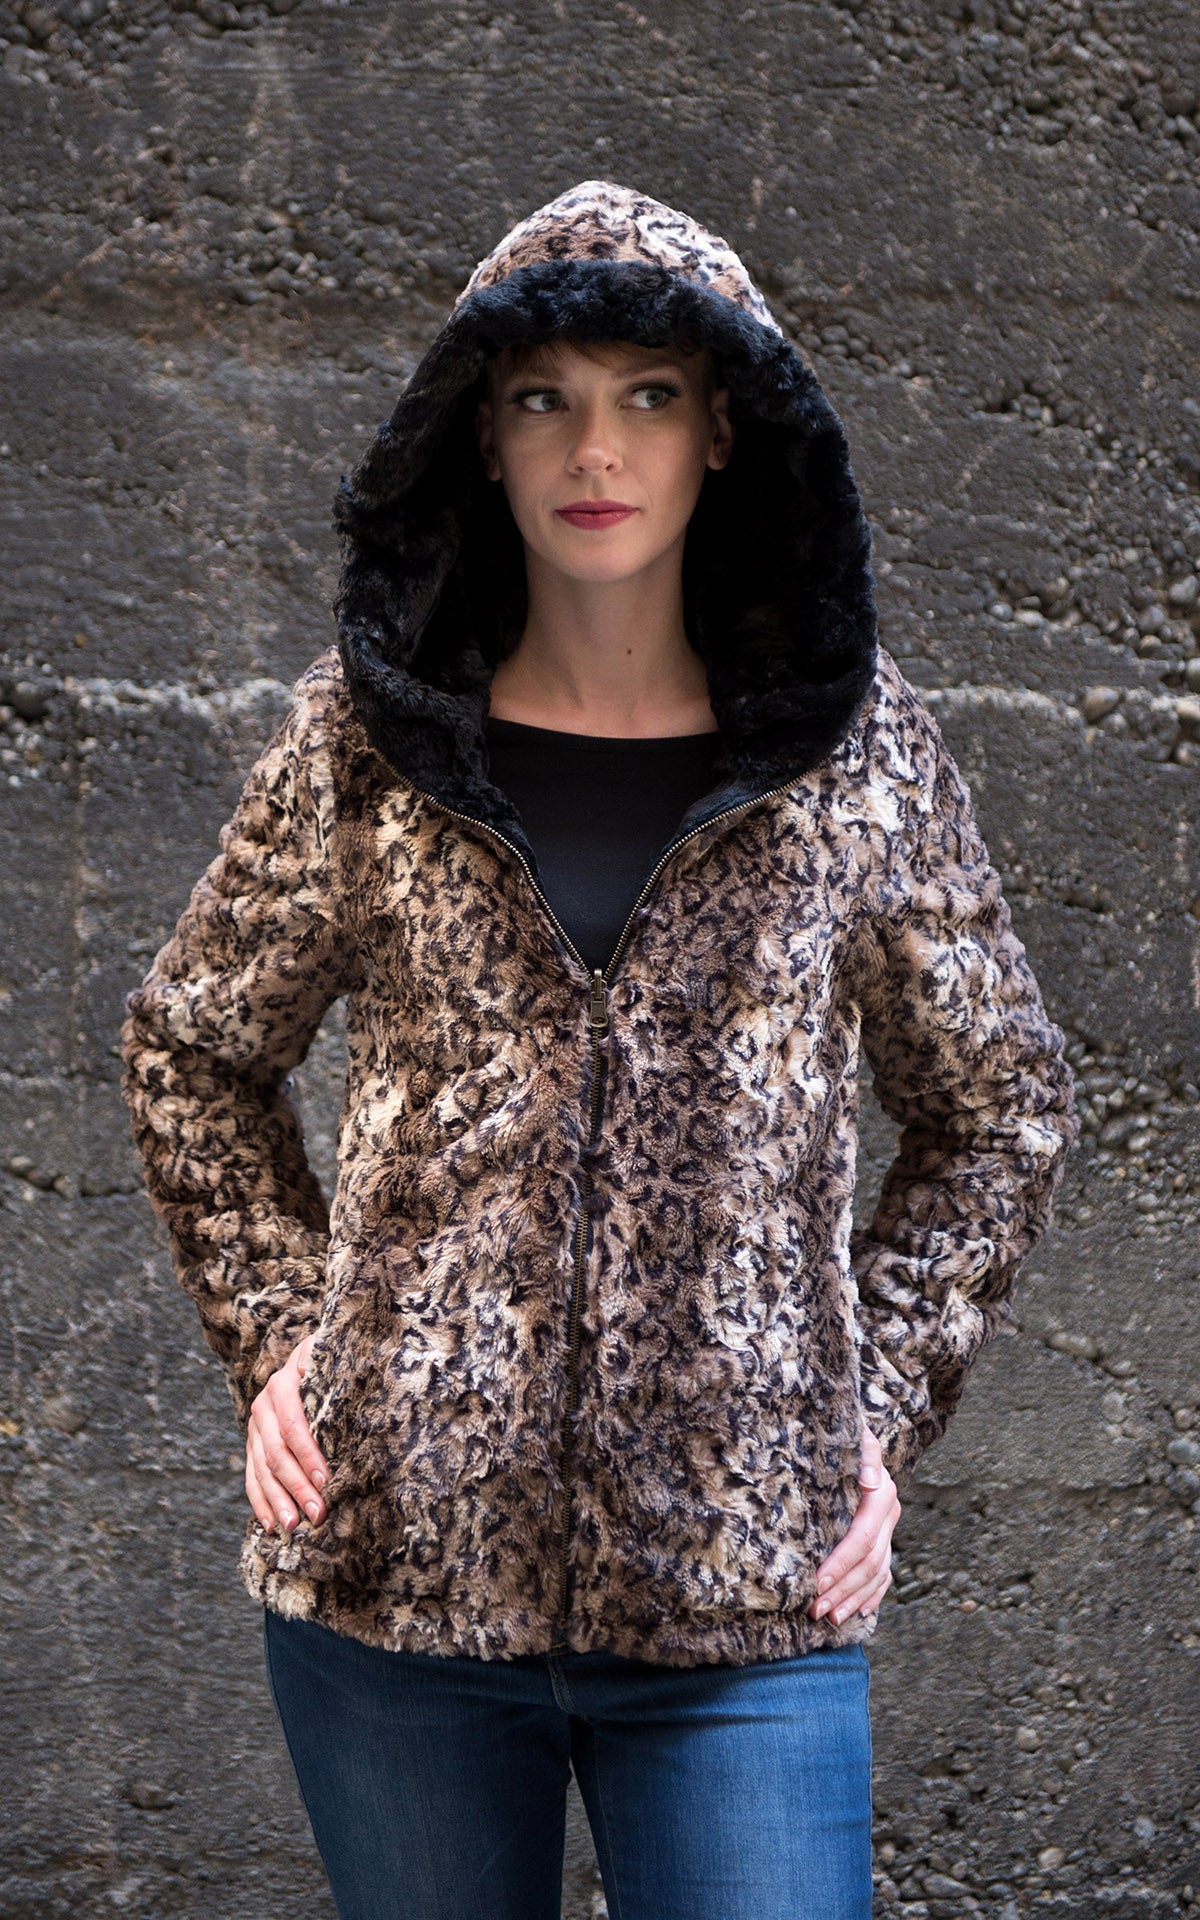 loren Hooded Coat - Reversible in Carpathian faxu fur handmade in Seattle WA USA